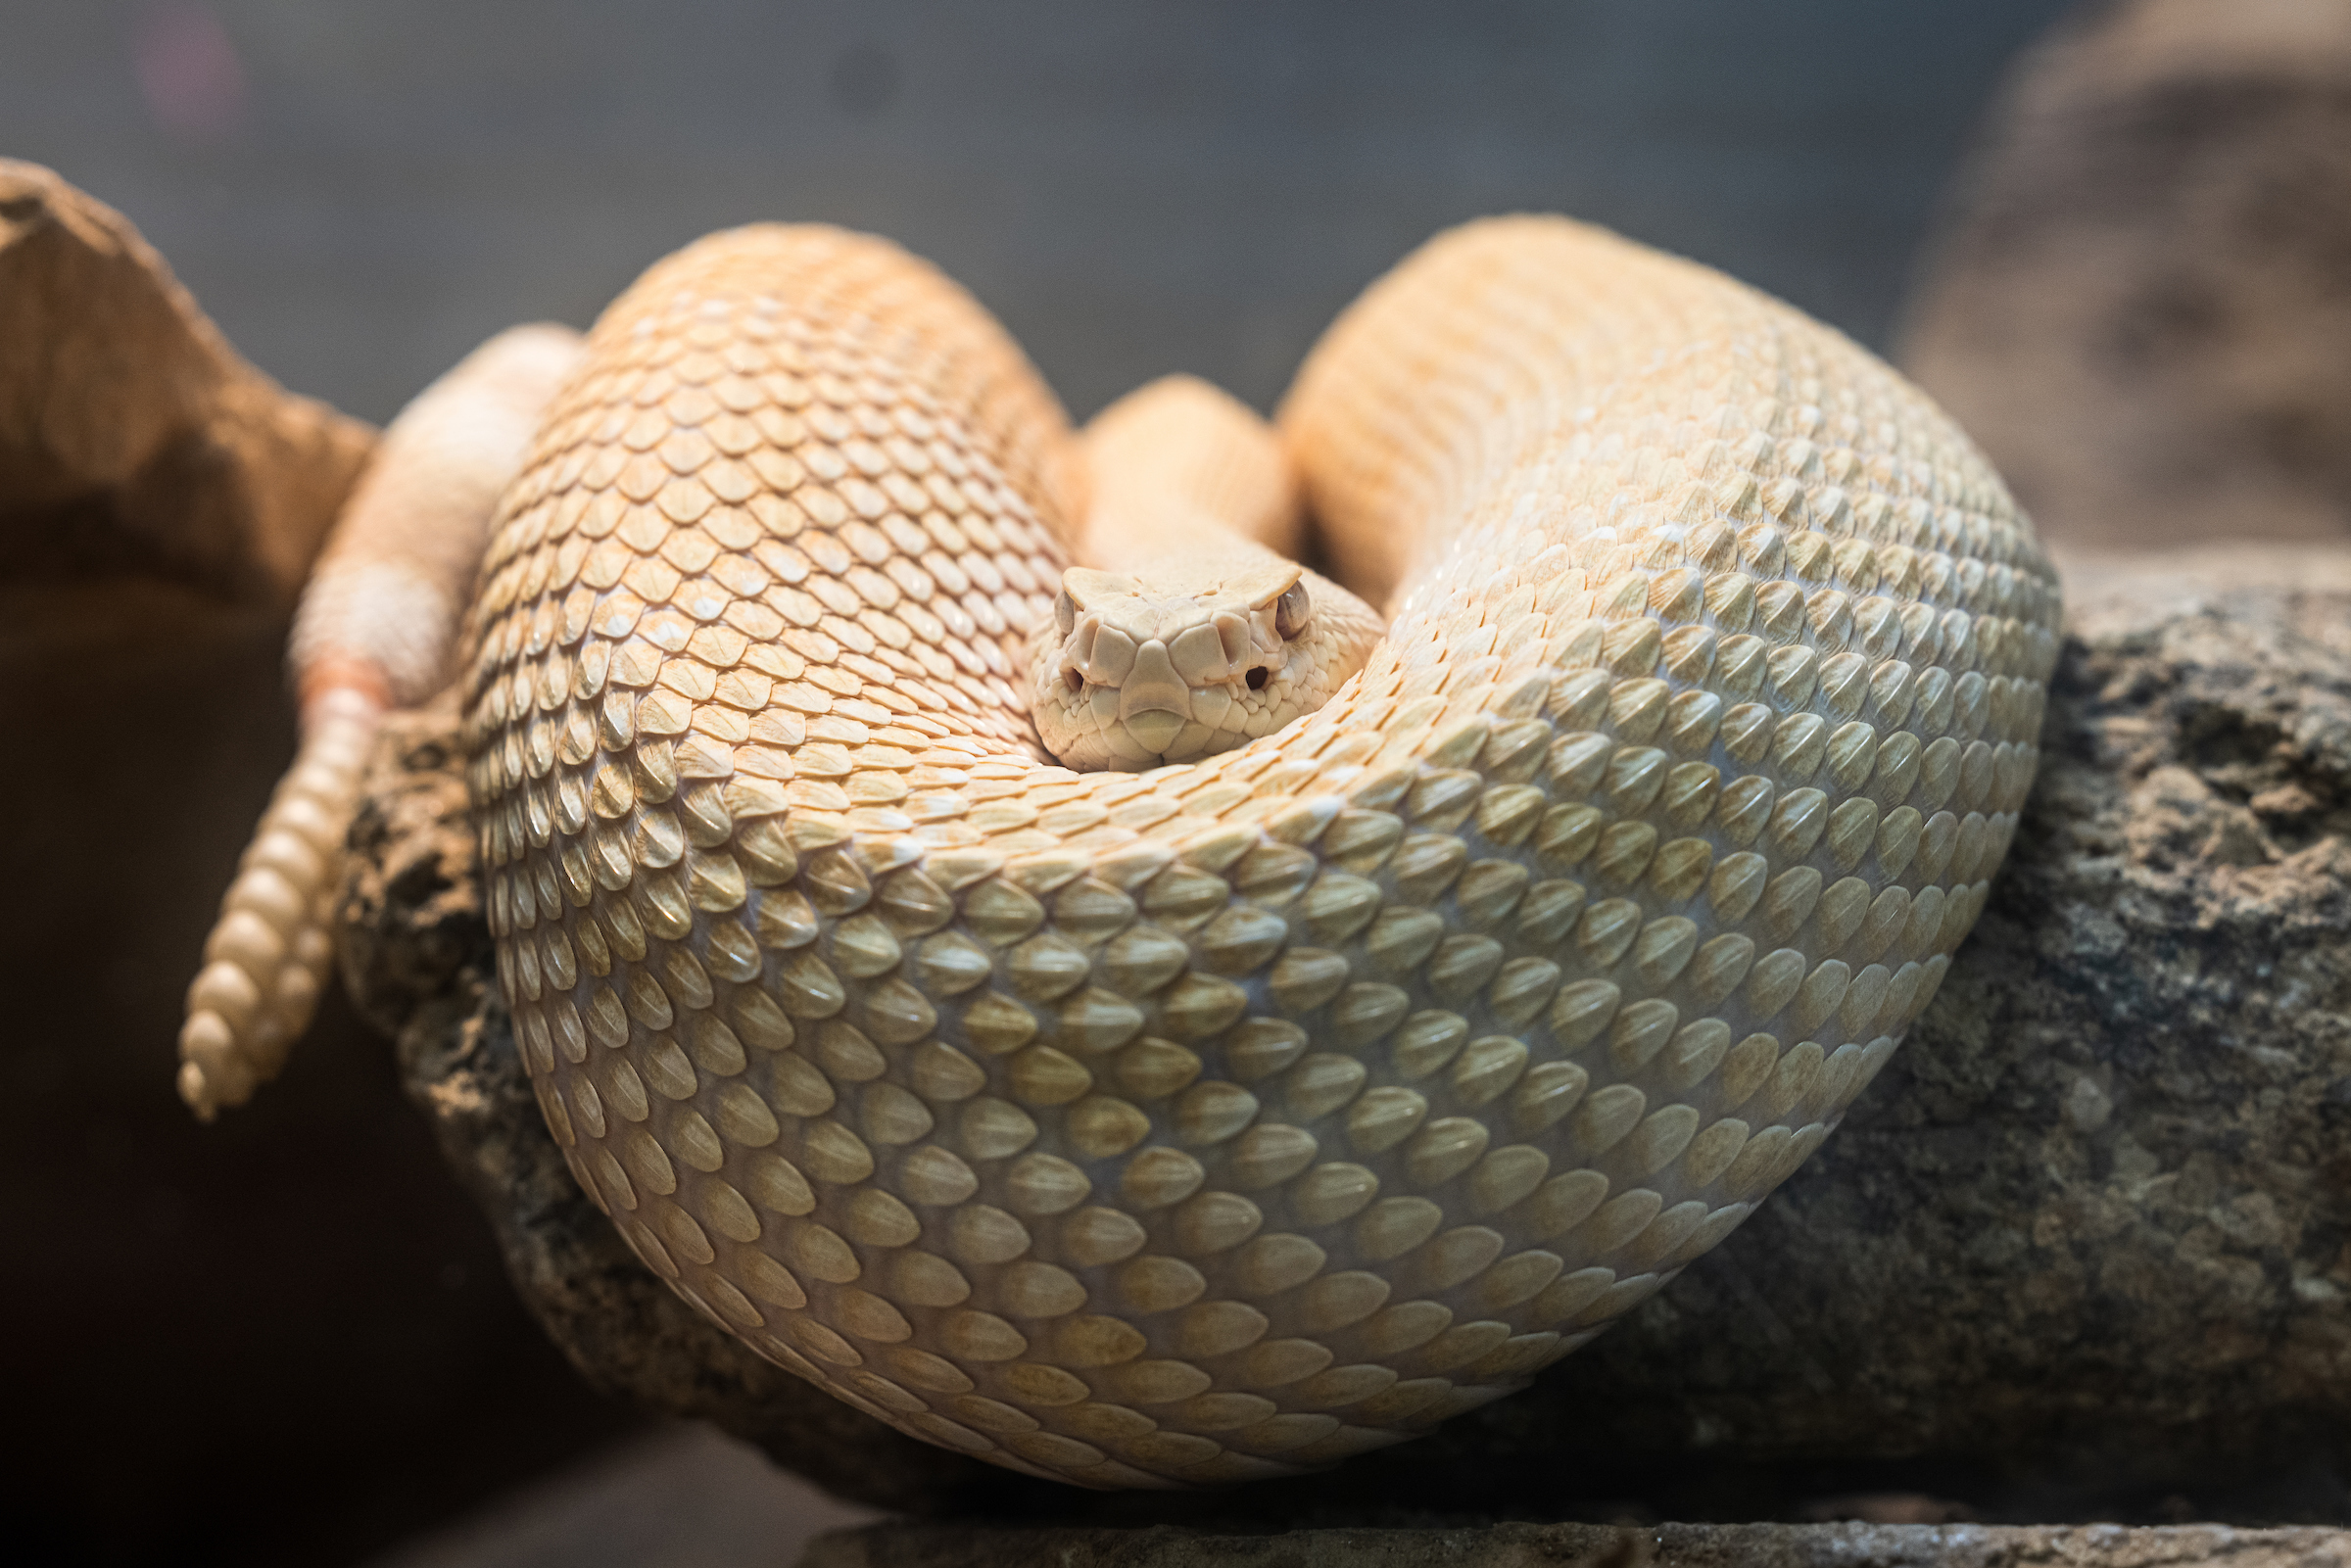 Joey albino rattlesnake ASU